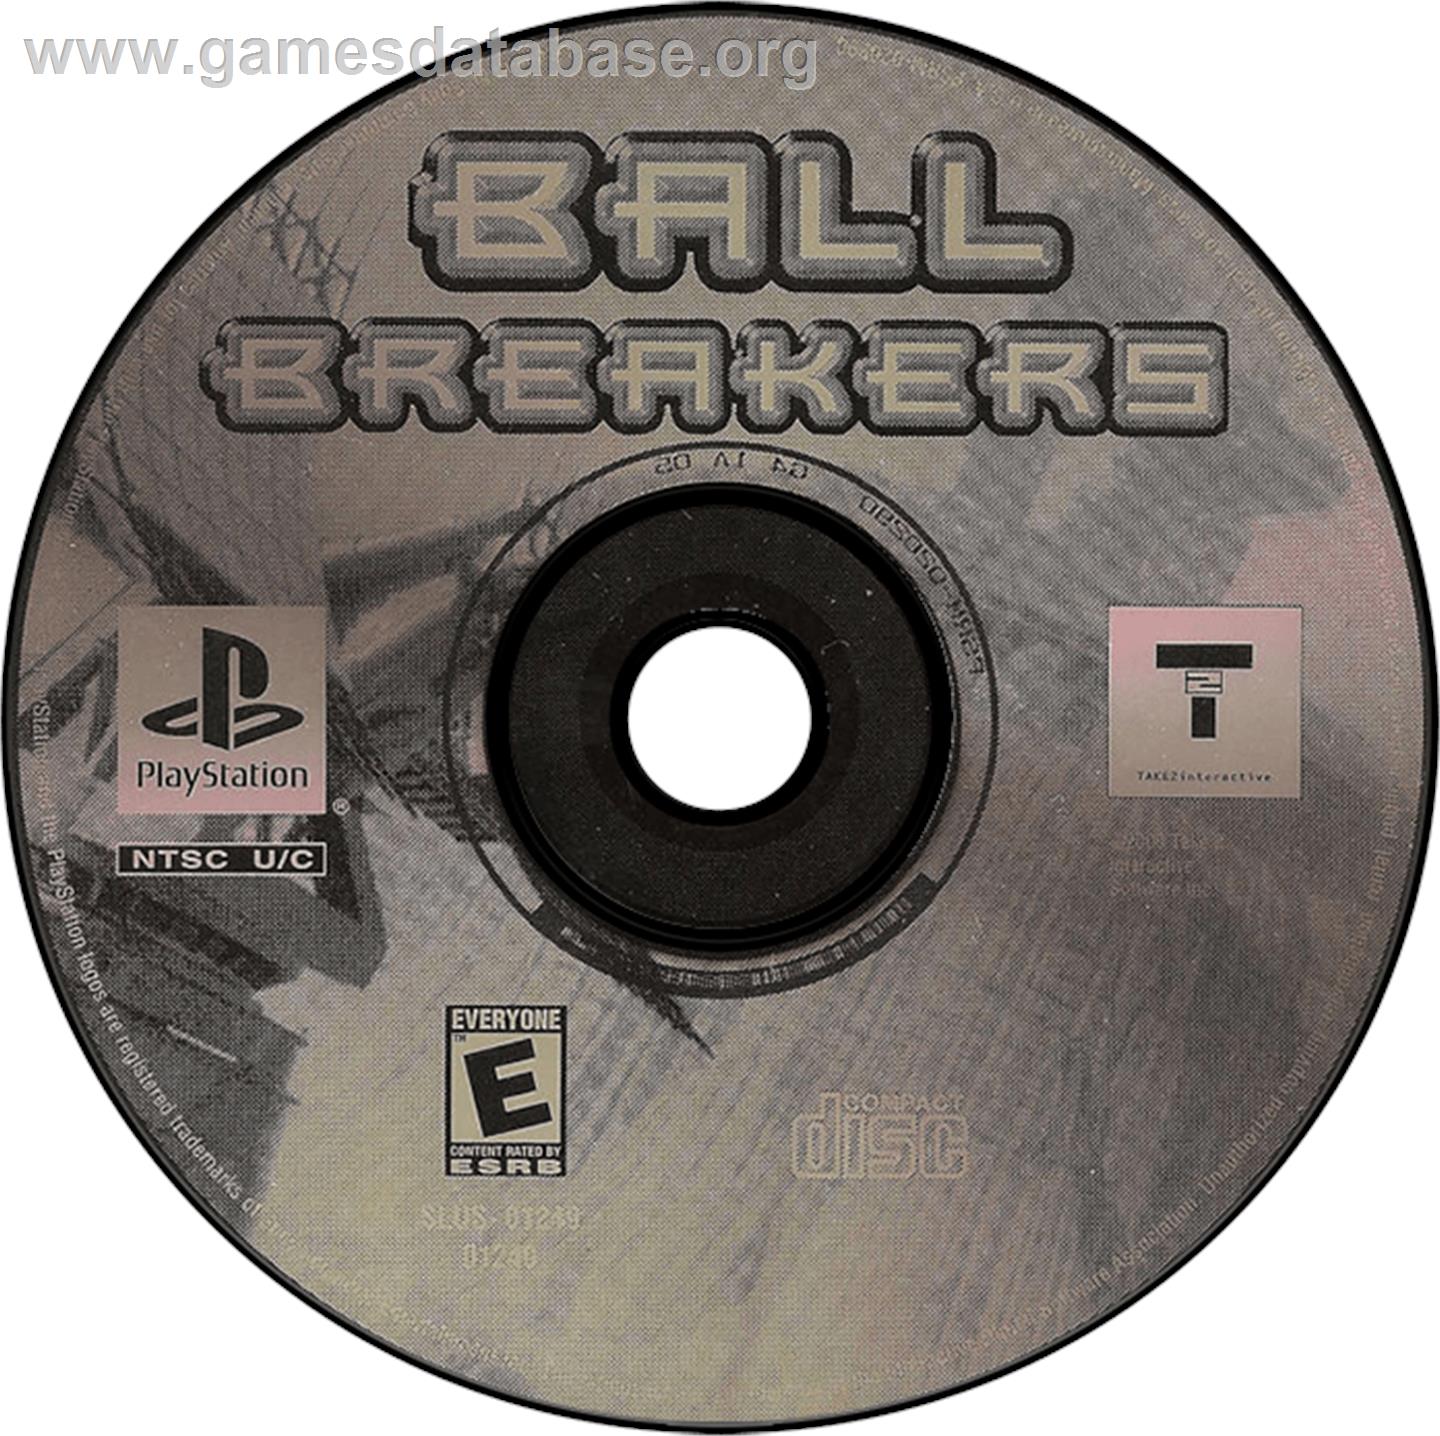 Ball Breakers - Sony Playstation - Artwork - Disc